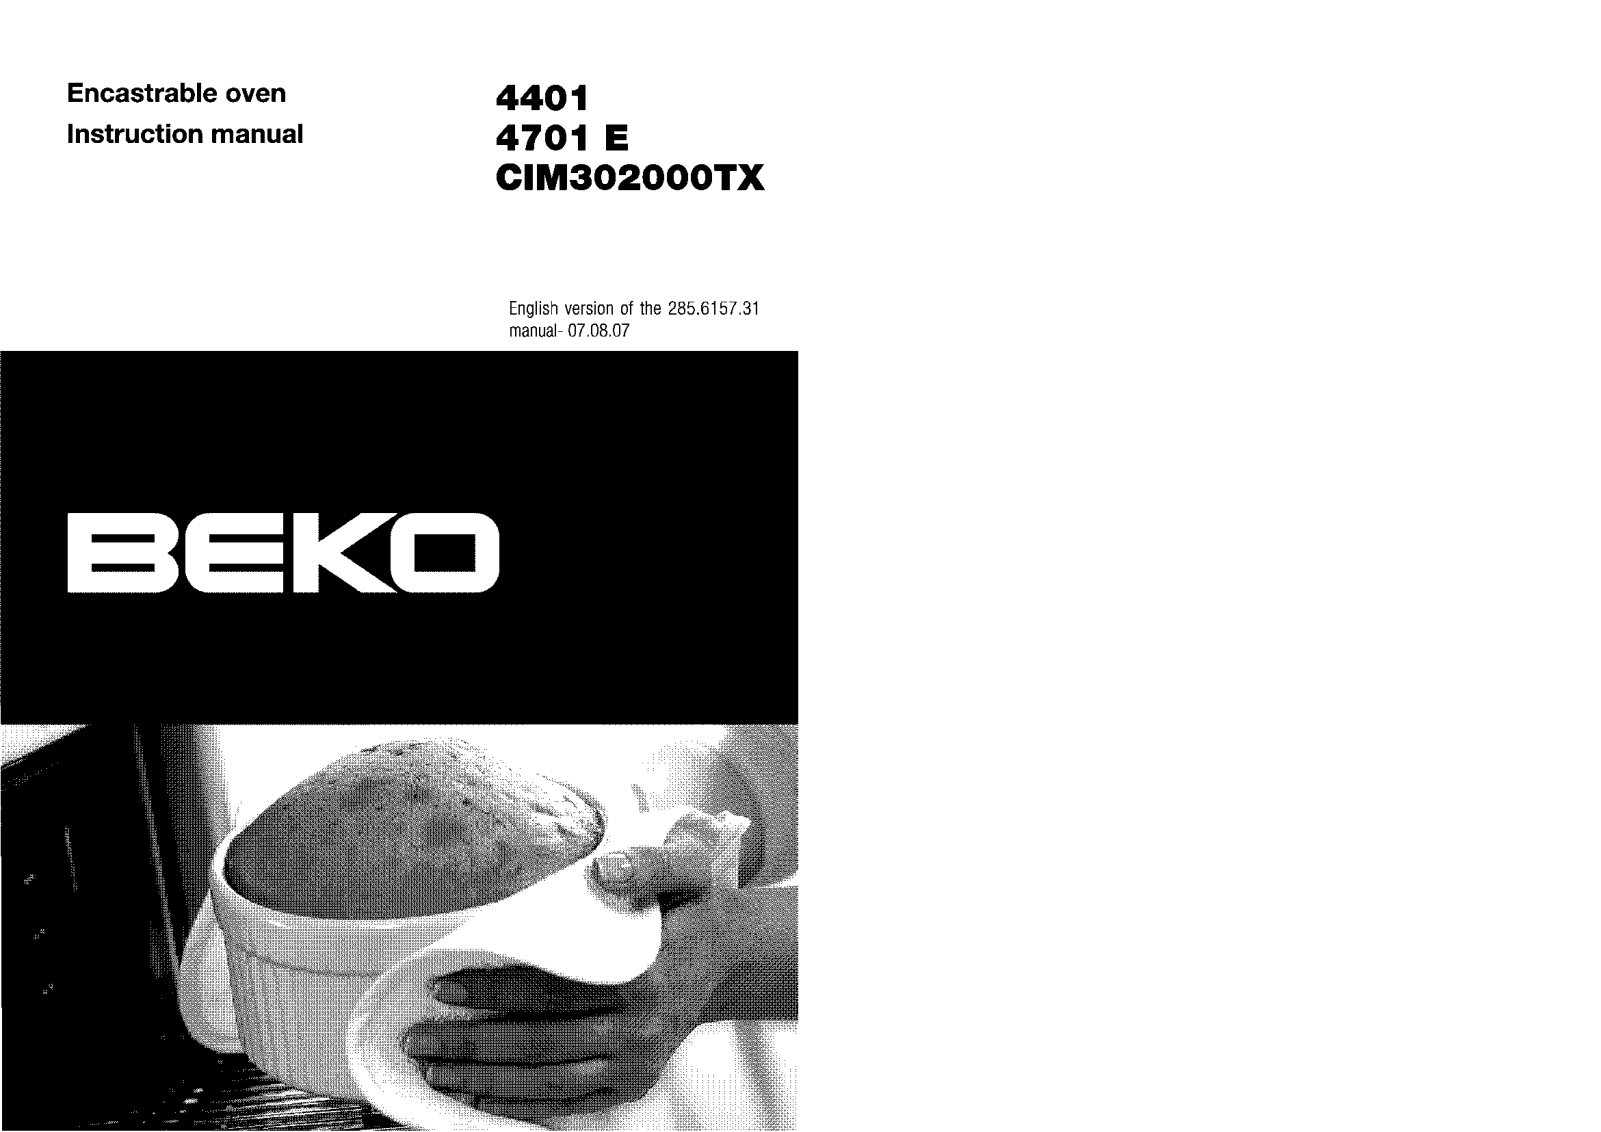 Beko 4701 E, 4401, CIM302000TX User Manual